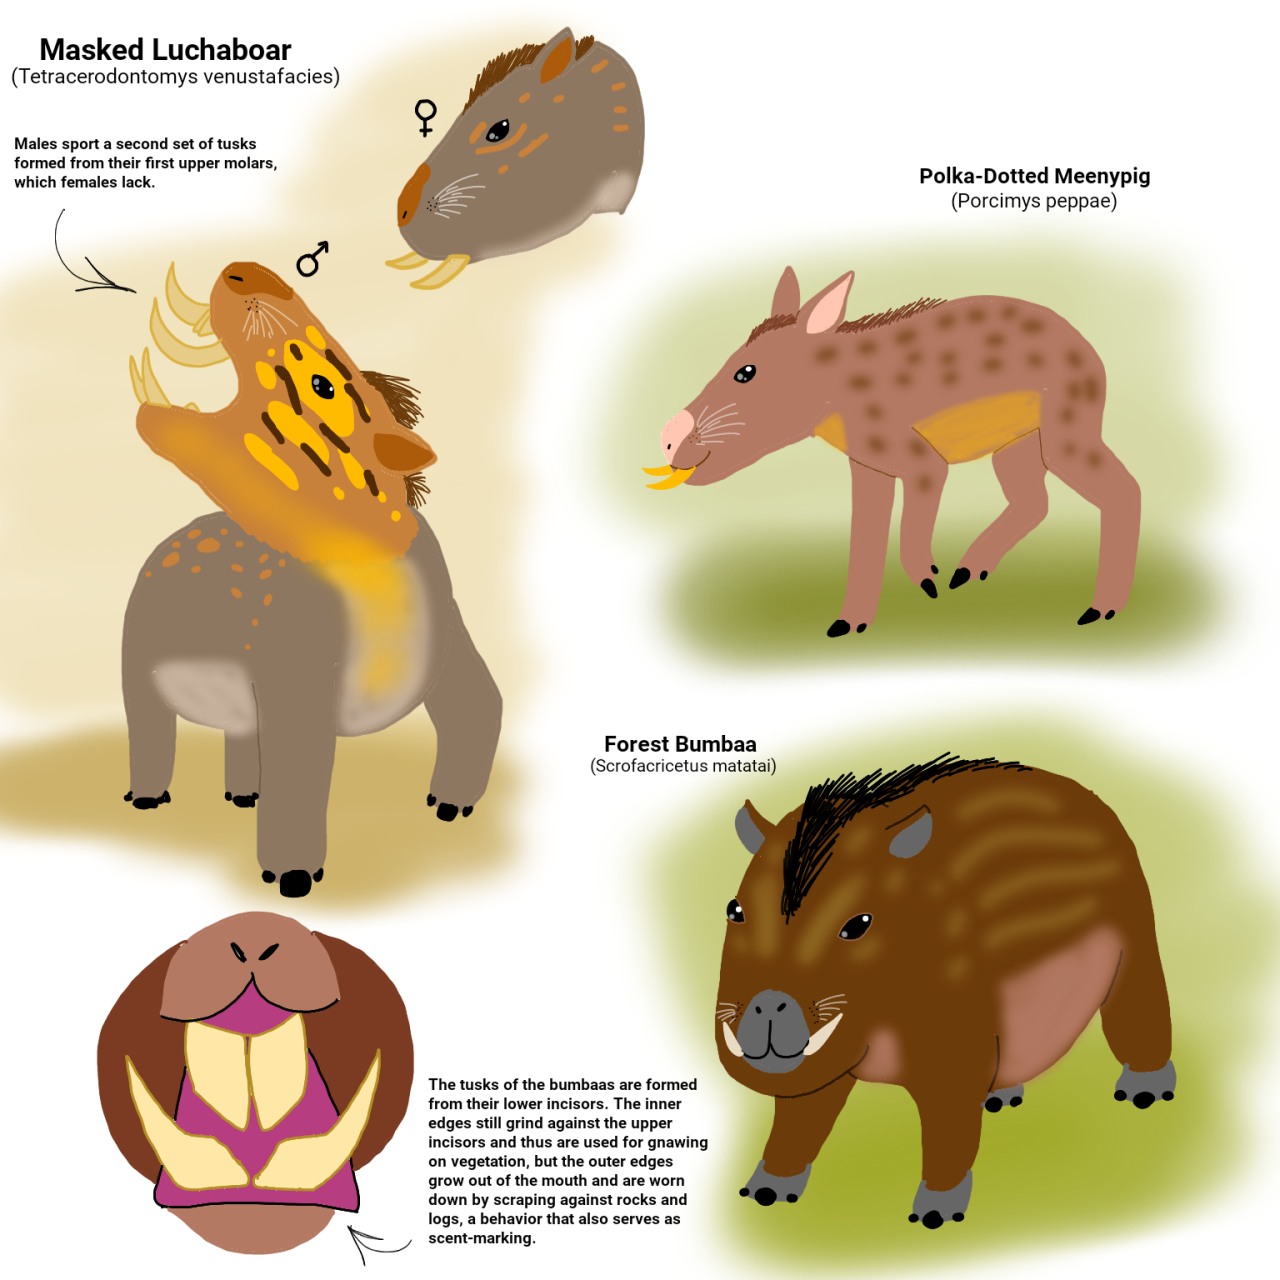 Hamster's Paradise: The Middle Rodentocene - The Furbils and Duskmice :  r/SpeculativeEvolution